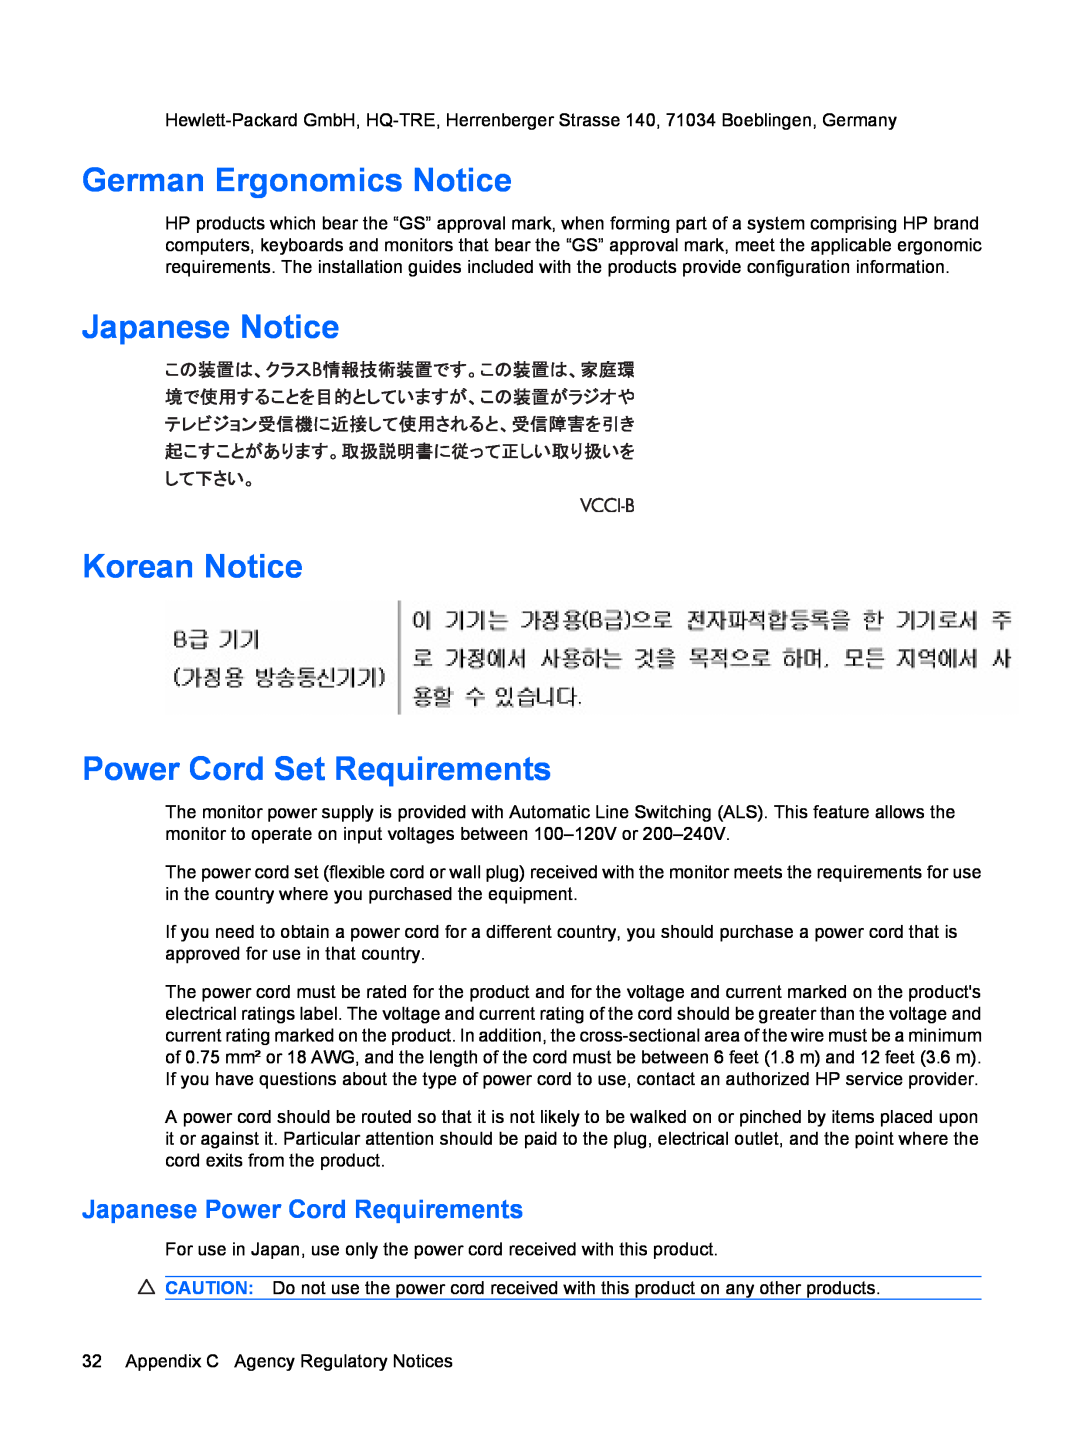 HP LE1711 17-inch manual German Ergonomics Notice, Japanese Notice Korean Notice Power Cord Set Requirements 